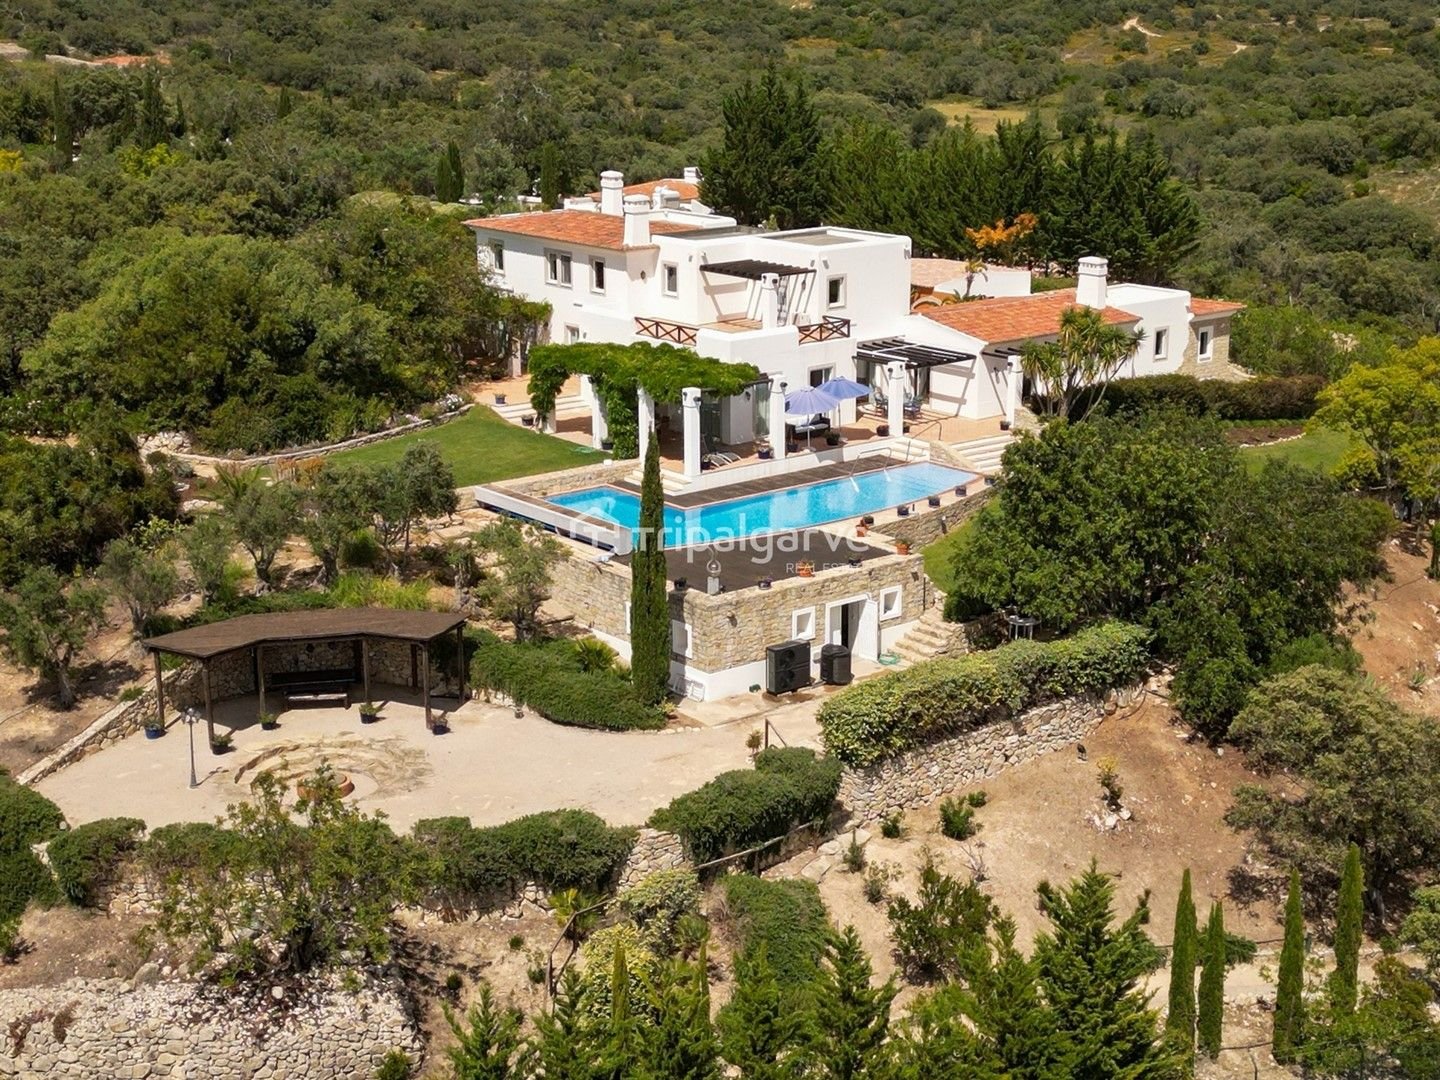 Einfamilienhaus zum Kauf 3.800.000 € 4 Zimmer 390 m² Faro  Loul  Loul (So Clemente)  Portugal Loul 8100-243